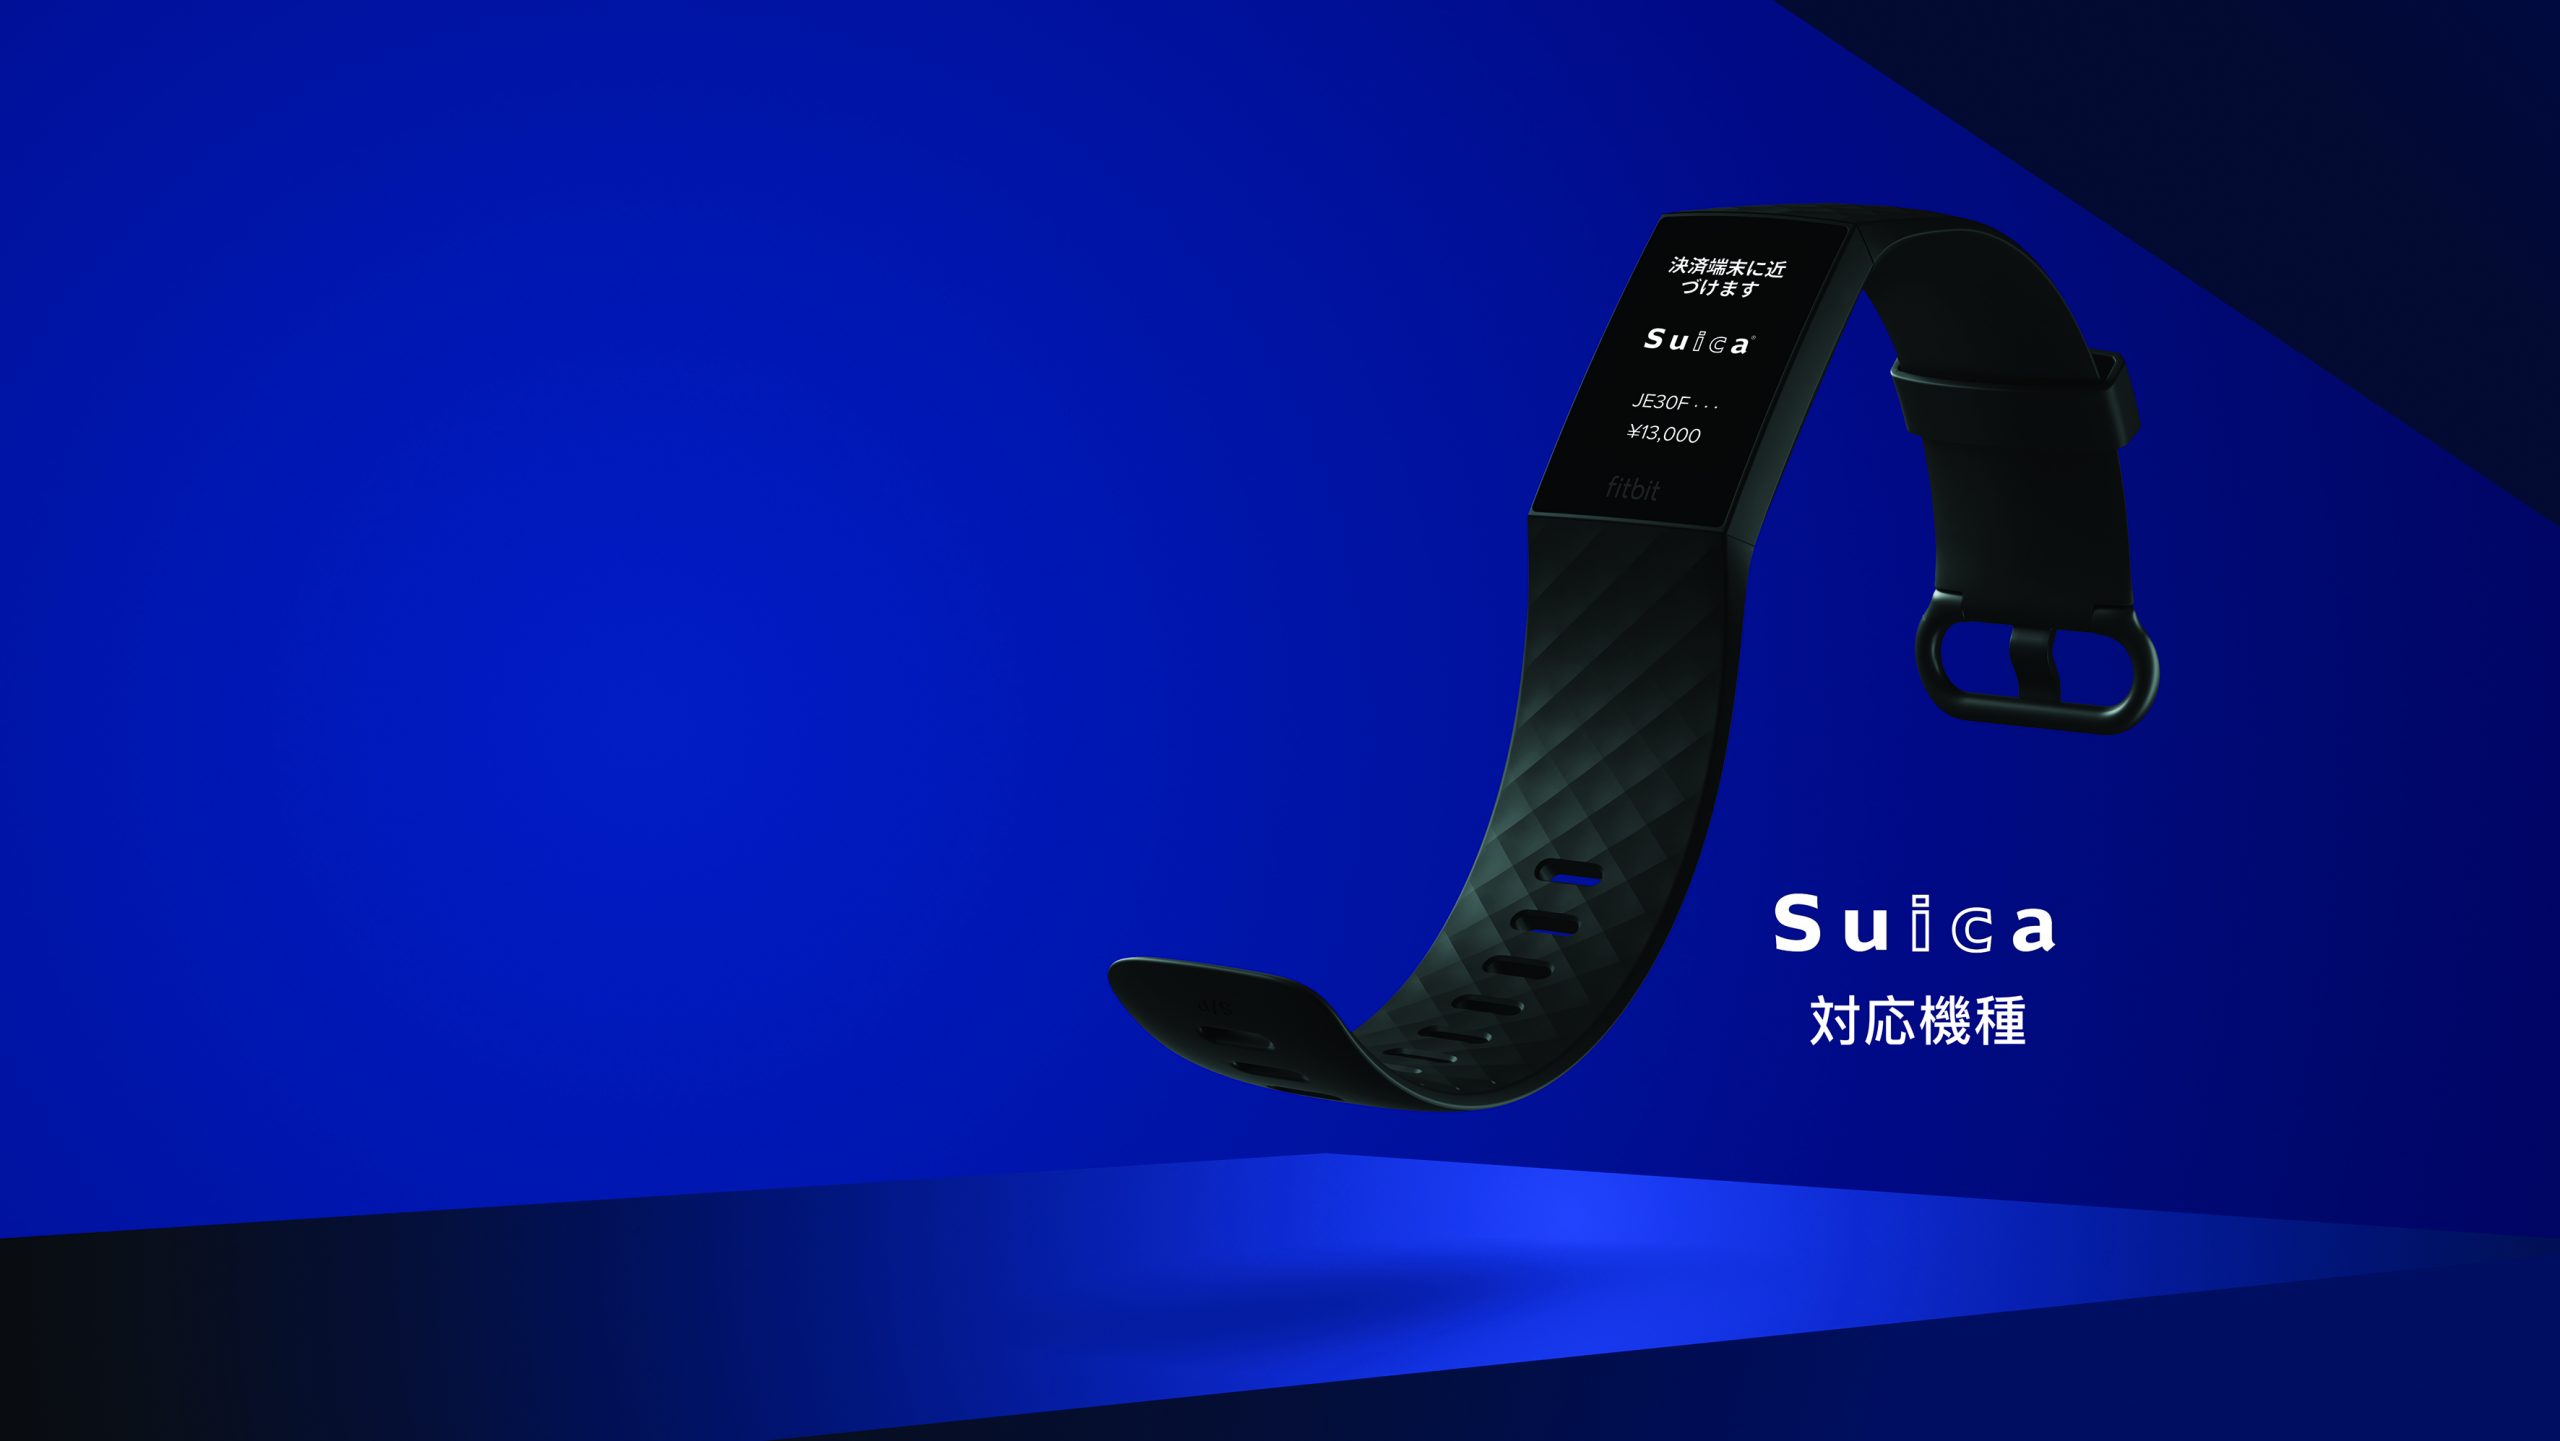 Charge 4に Suica 対応機種が登場しました。 - Fitbit Blog